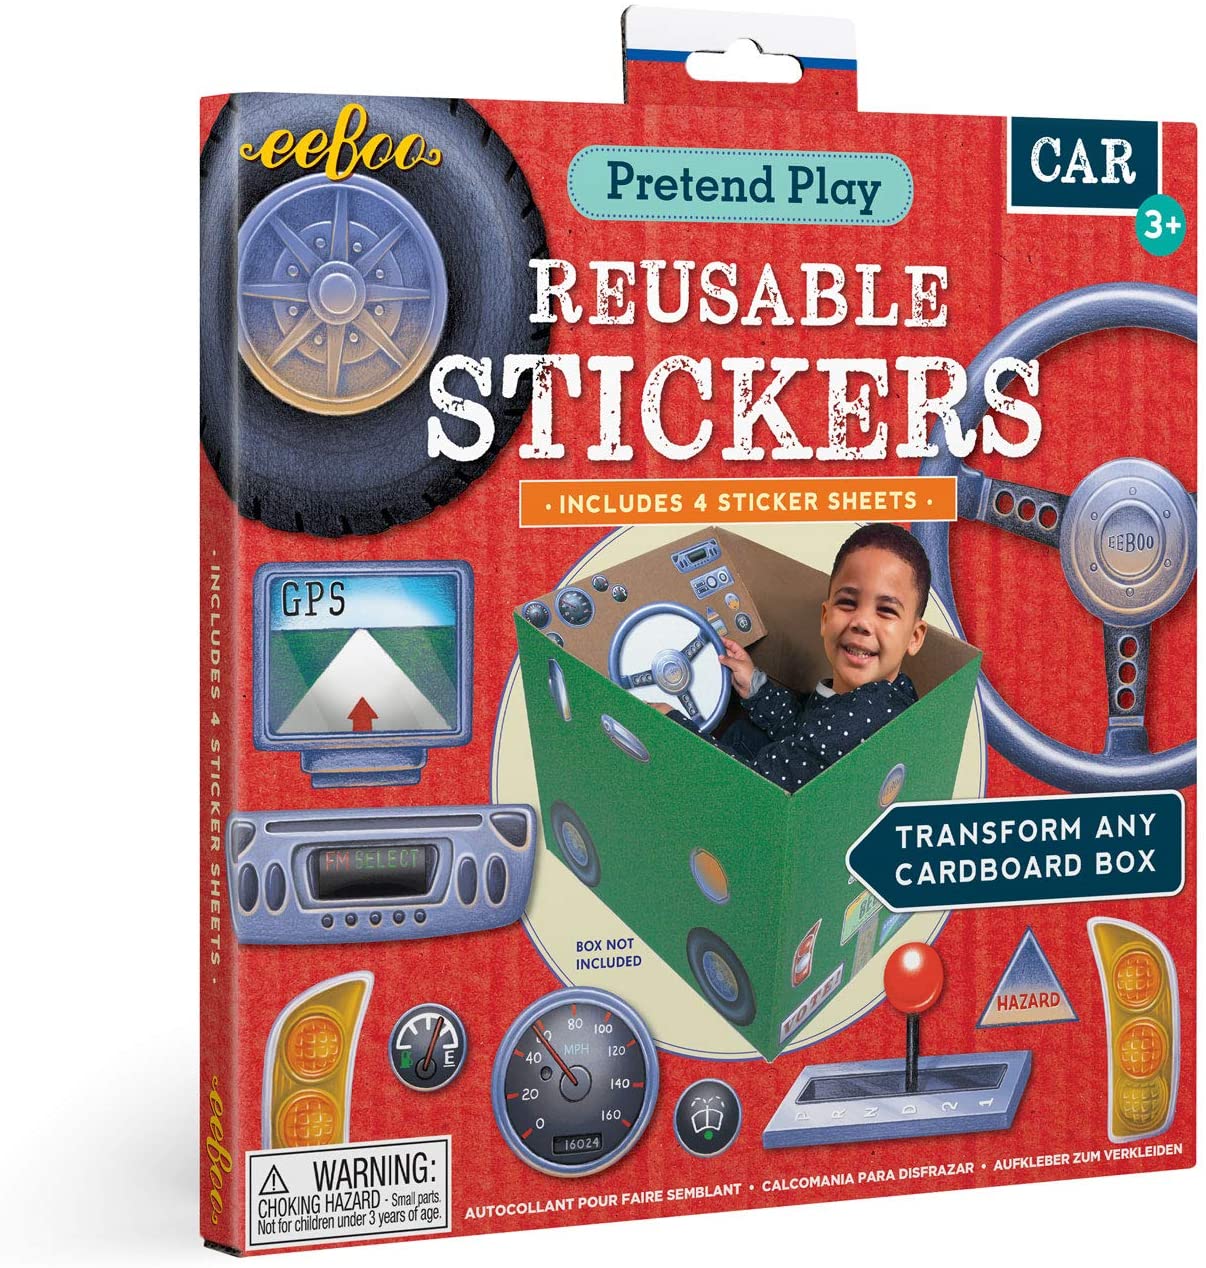 Pretend Play Reusable Stickers Car